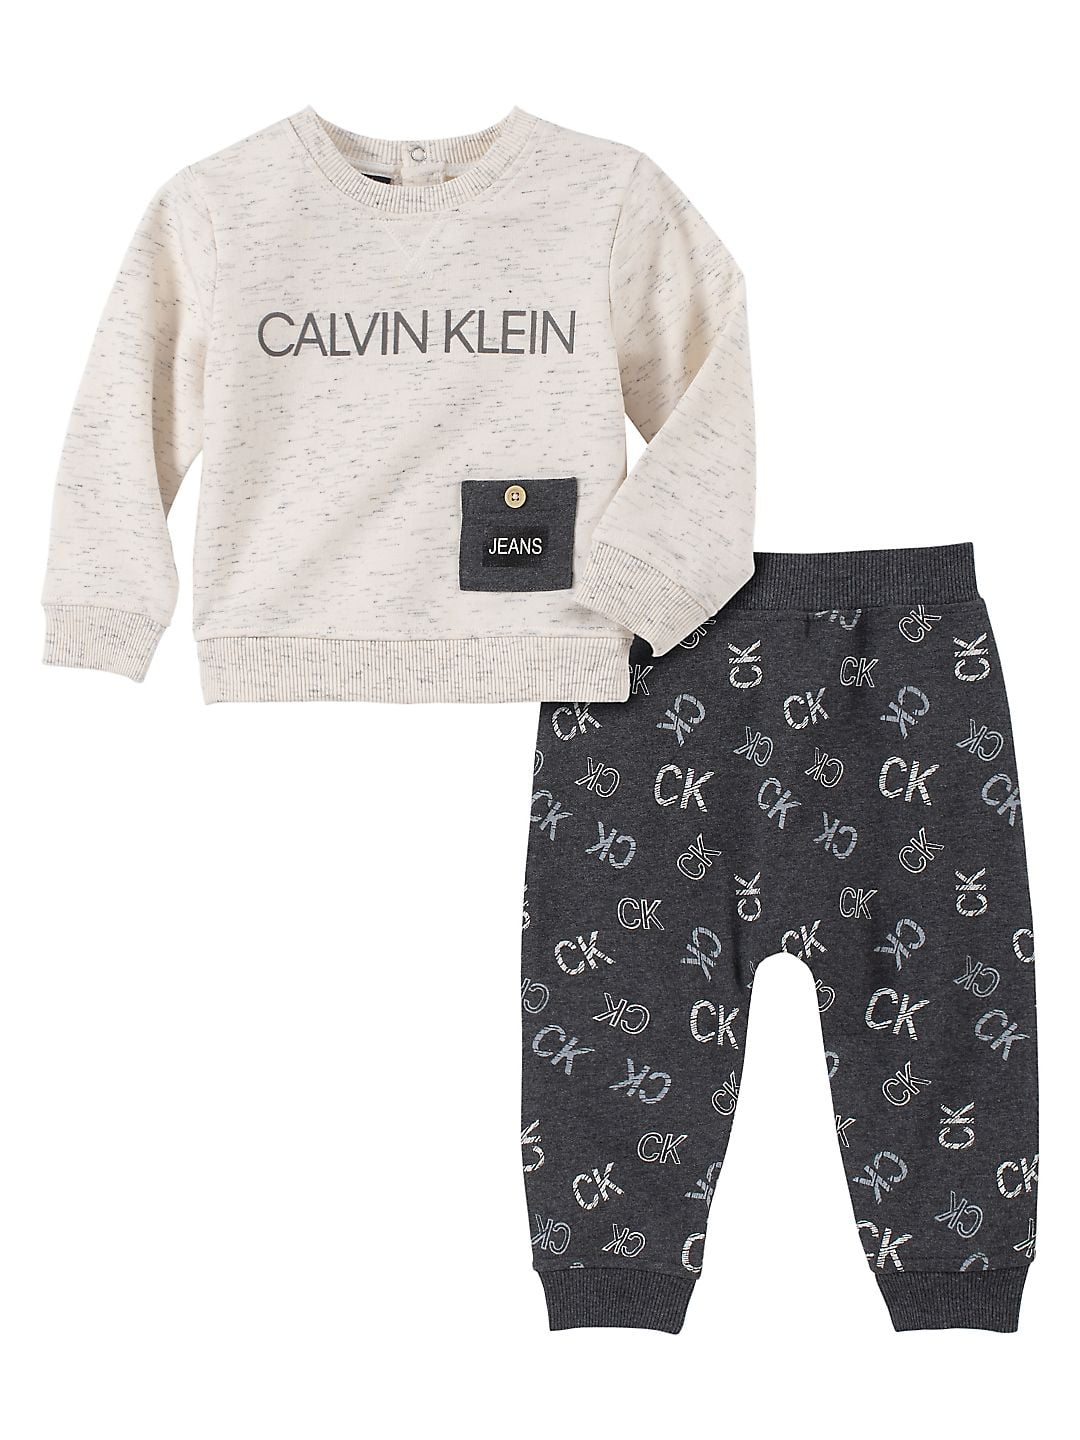 Calvin Klein Jeans - Baby Boy's 2-Piece Printed Pants Set - Walmart.com ...